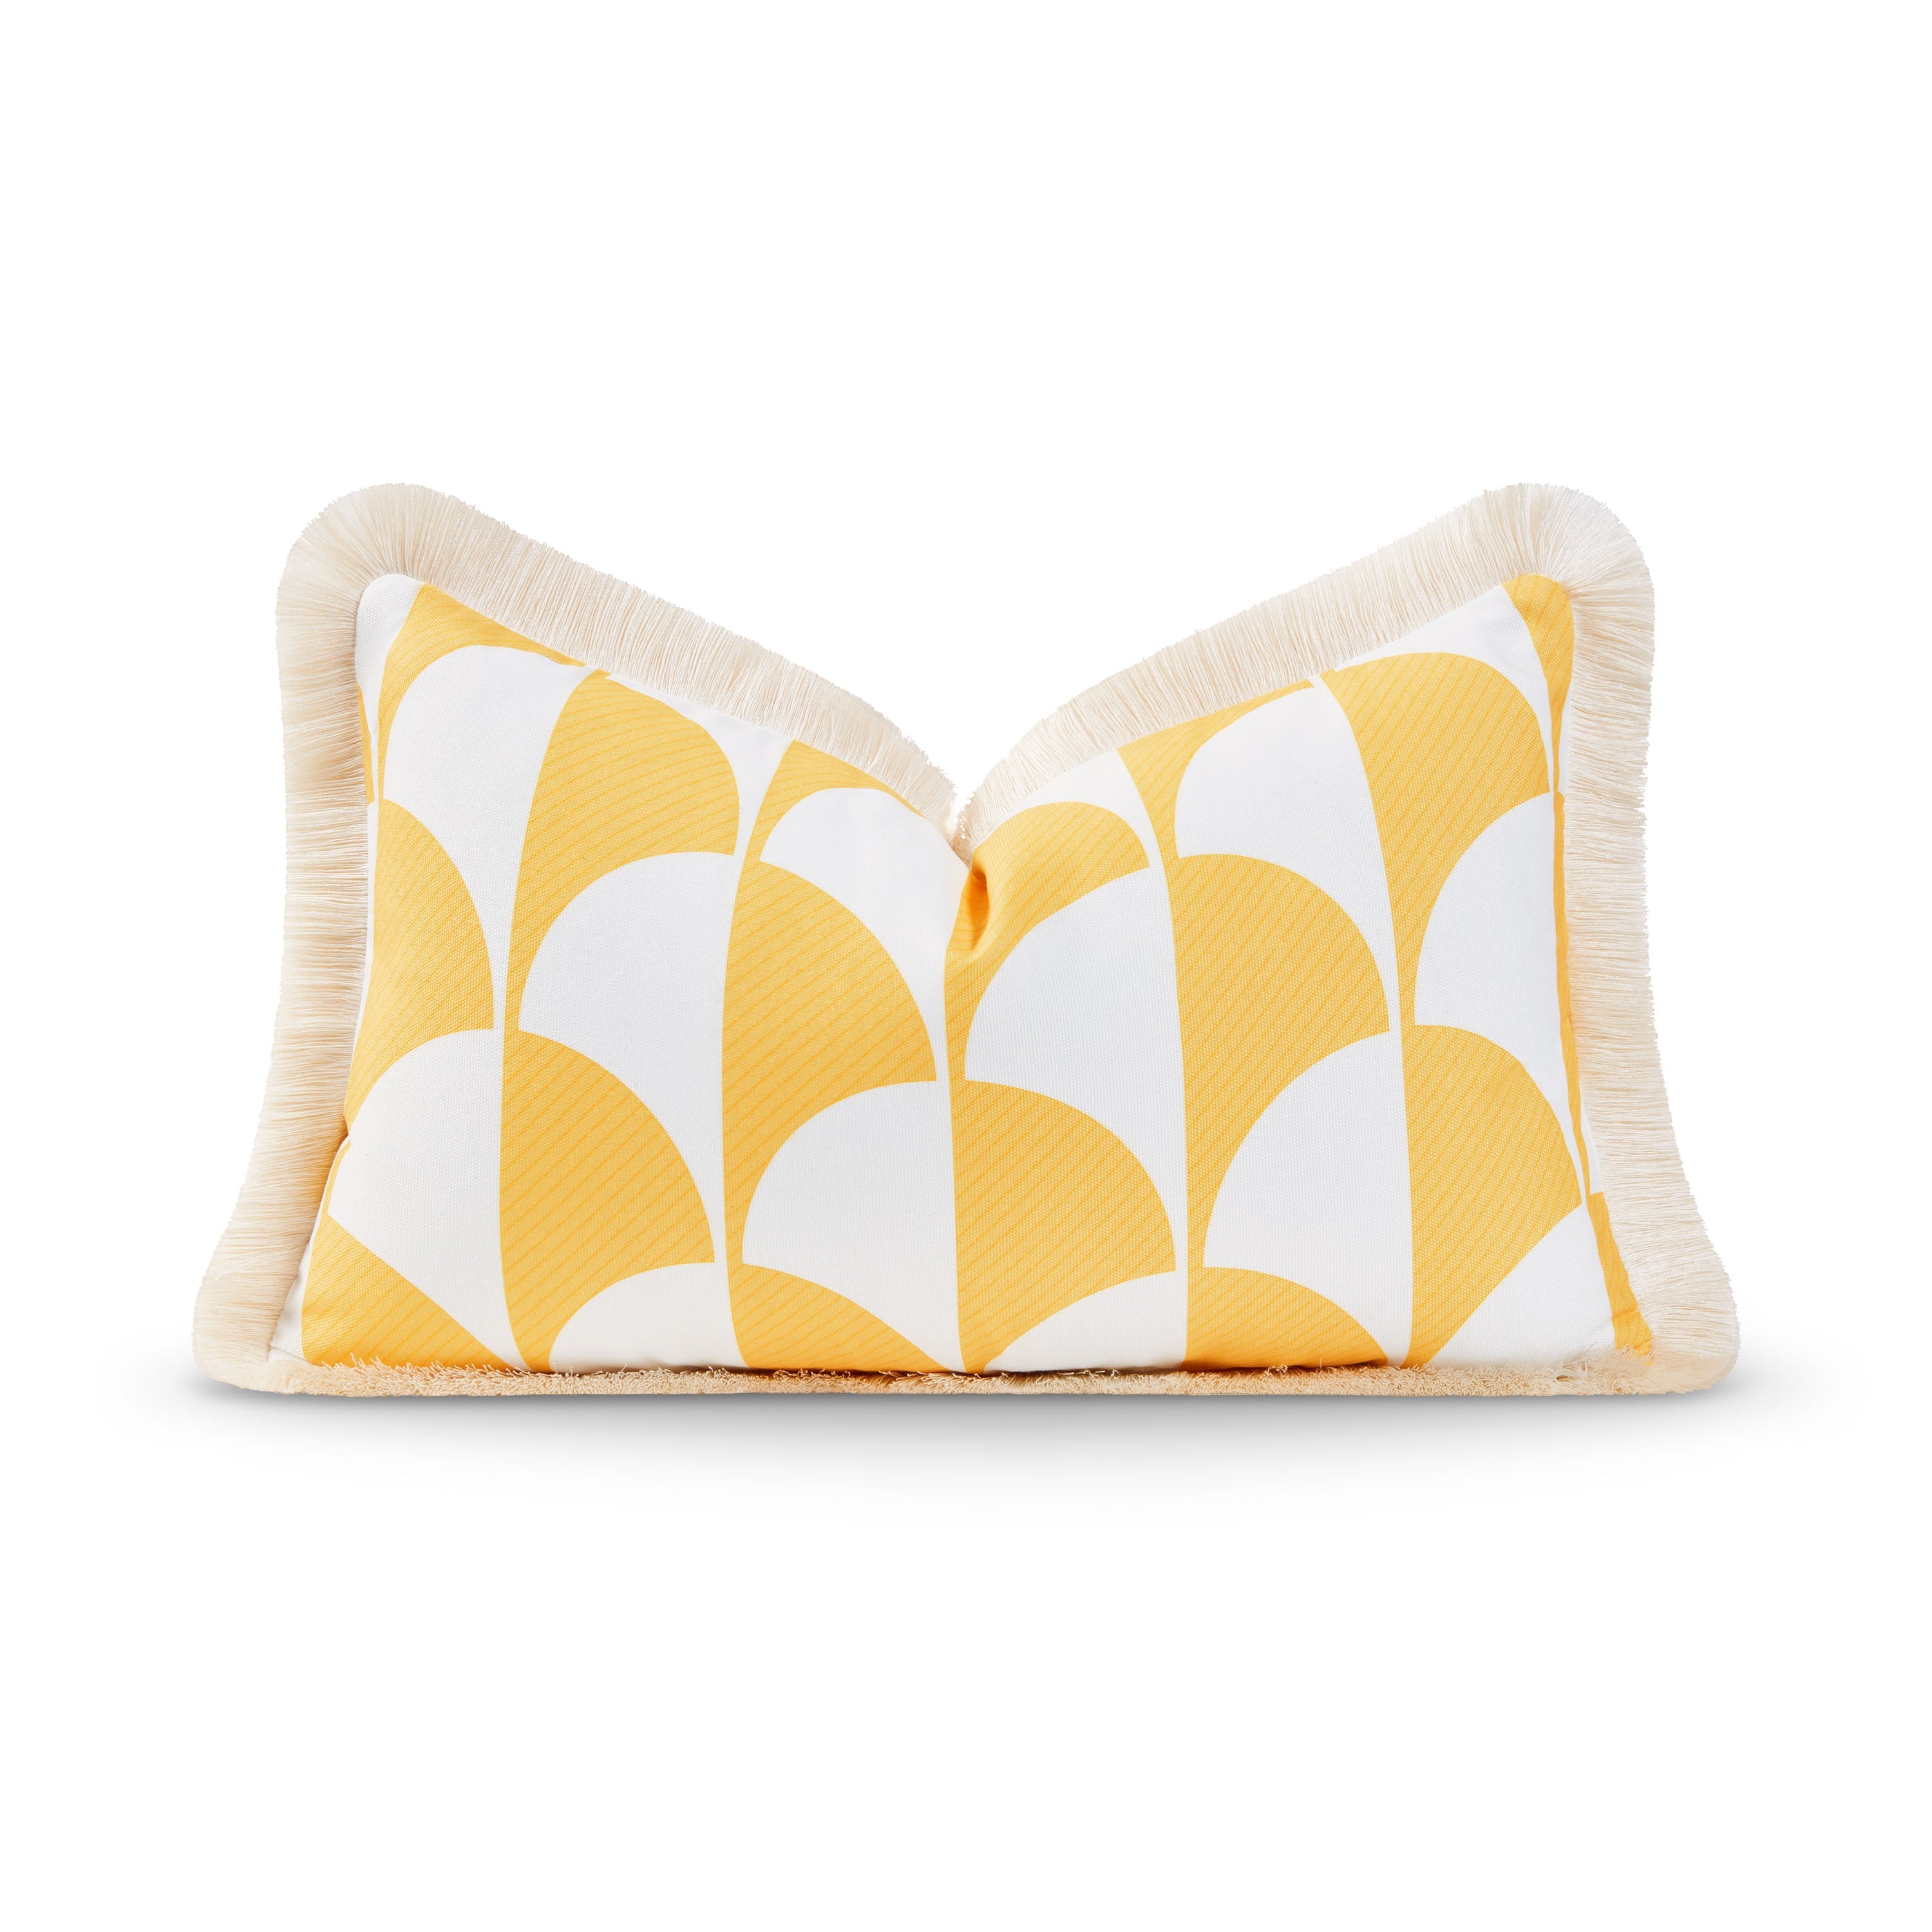 Coastal Indoor Outdoor Lumbar Pillow Cover, Scale Motif Fringe, Yellow, 12"x20"